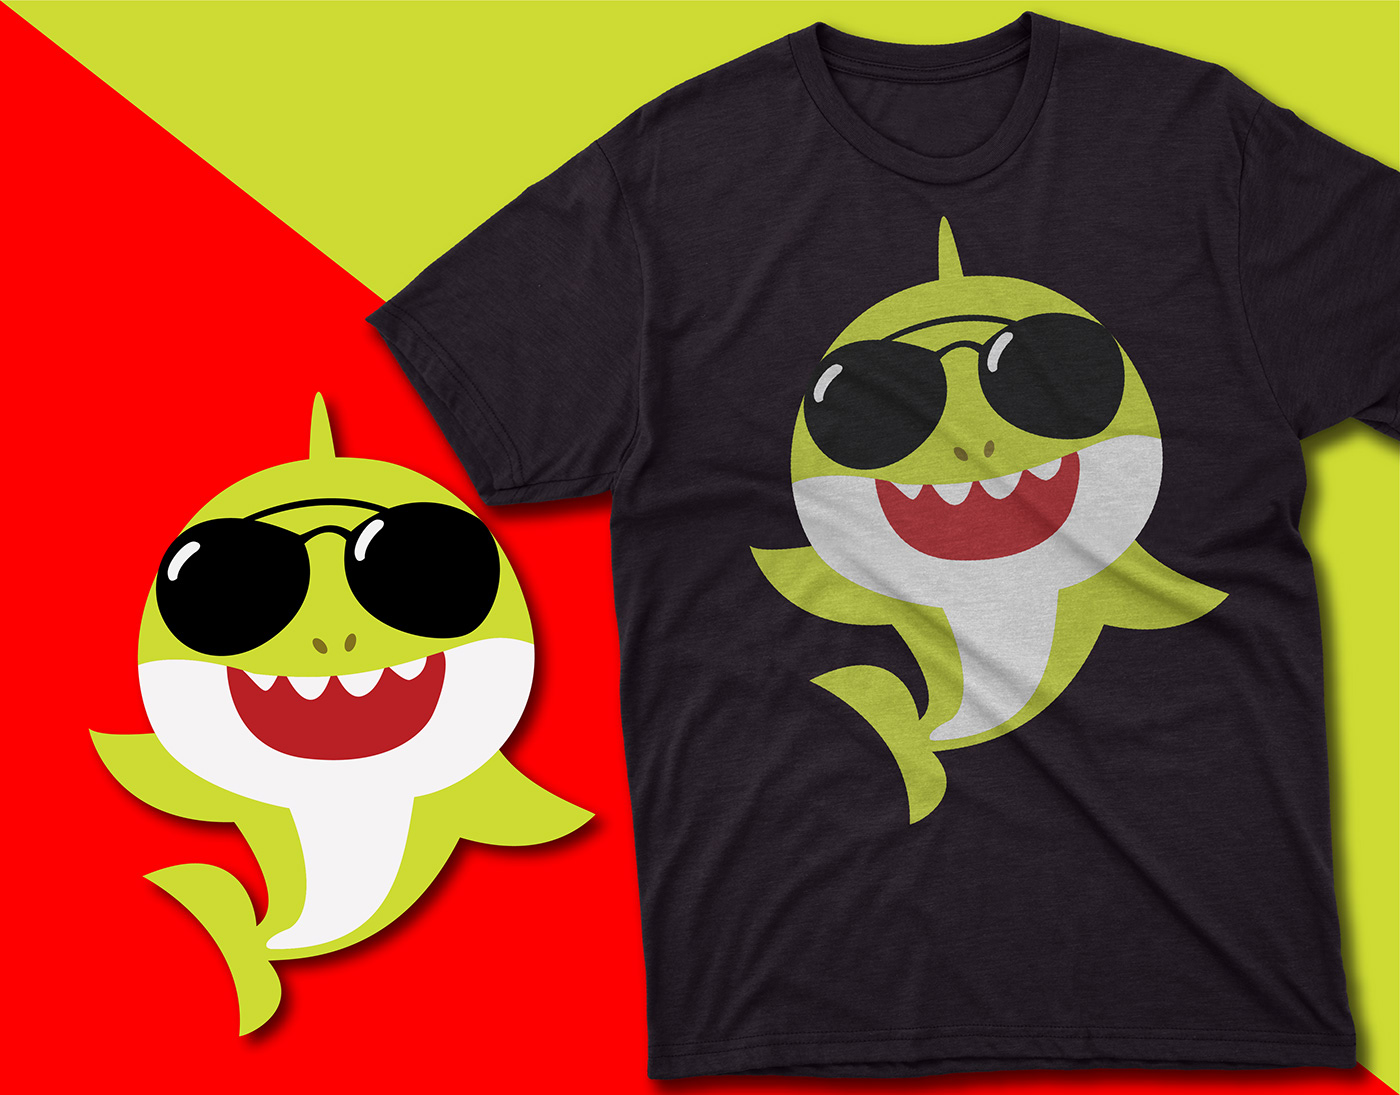 tshirt T-Shirt Design Clothing Fashion  ads Advertising  marketing   Graphic Designer sea t shirt shark t-shirt design